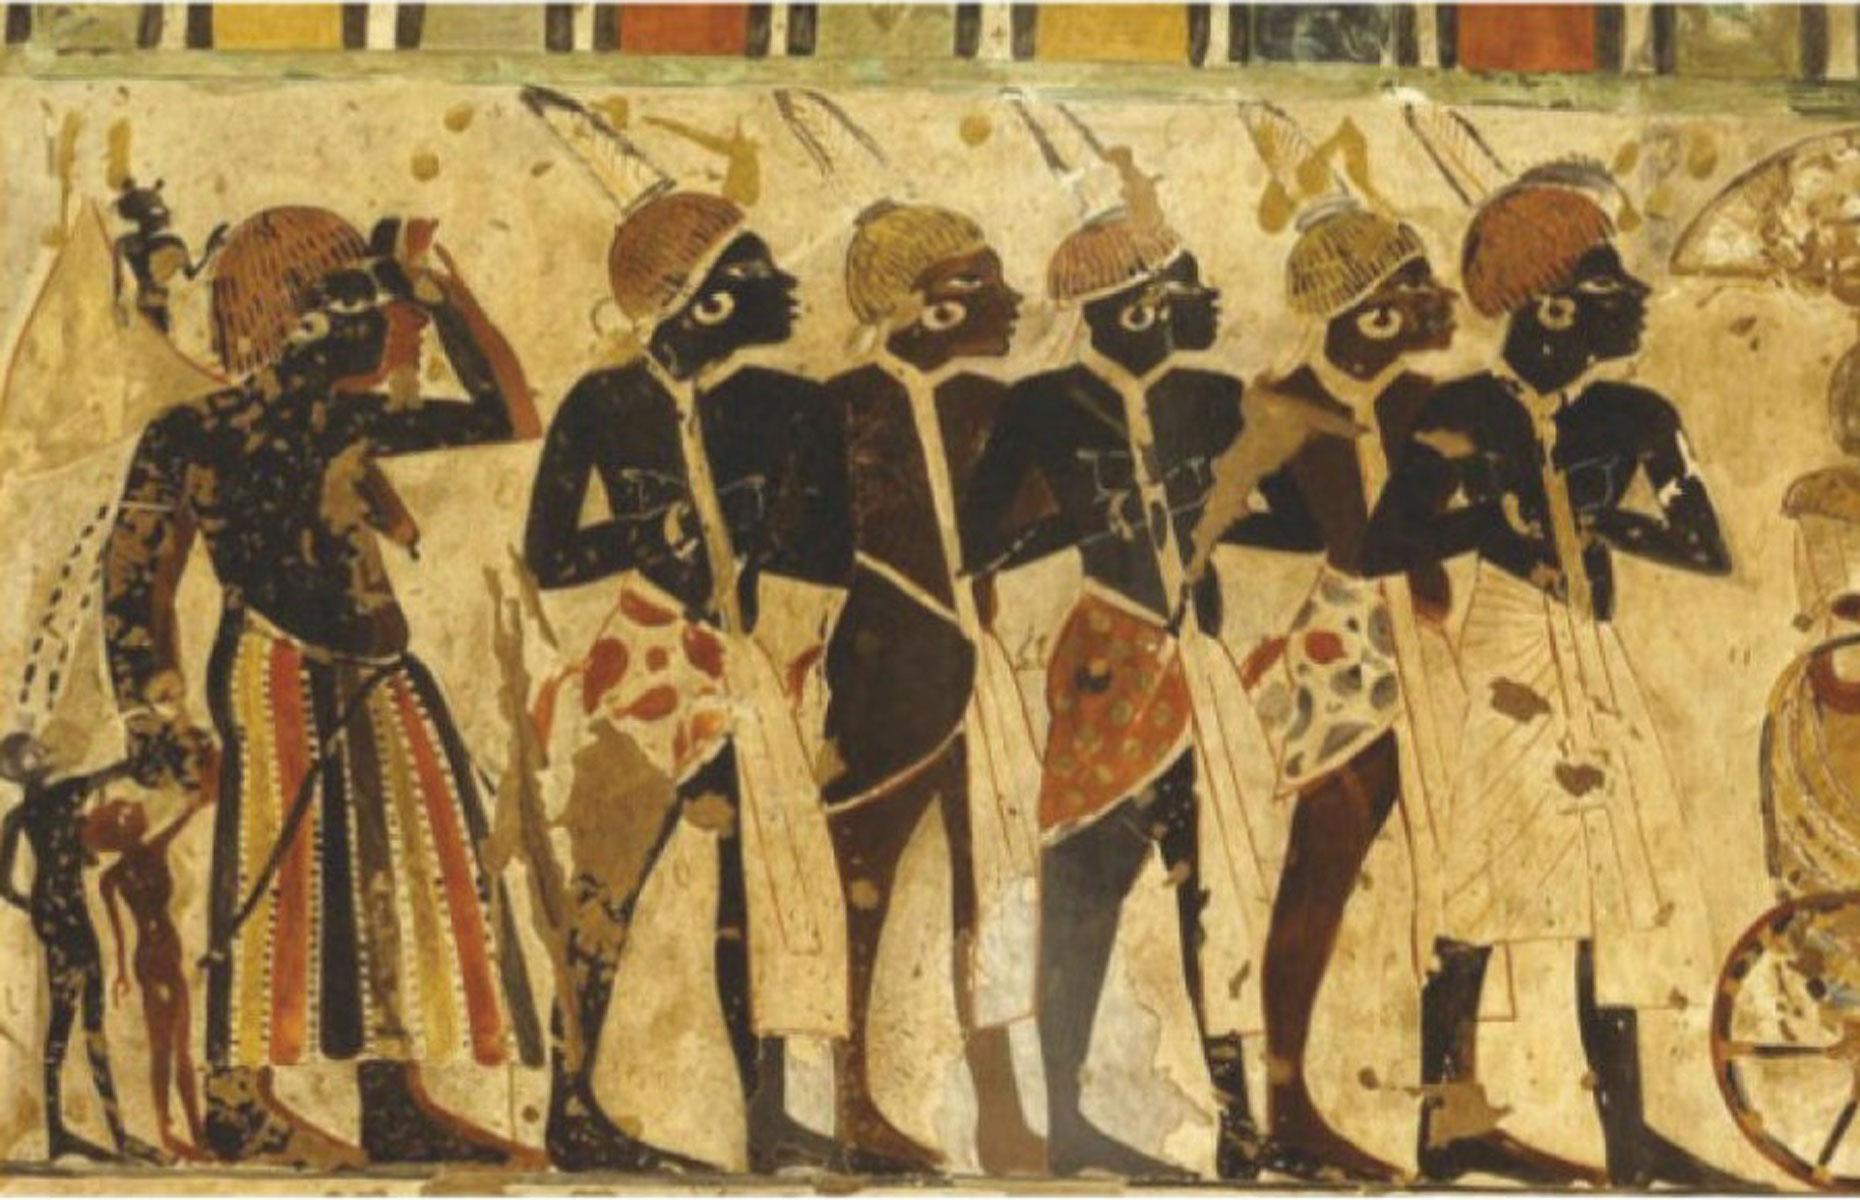 The Nubian people: antibiotics, 350 AD